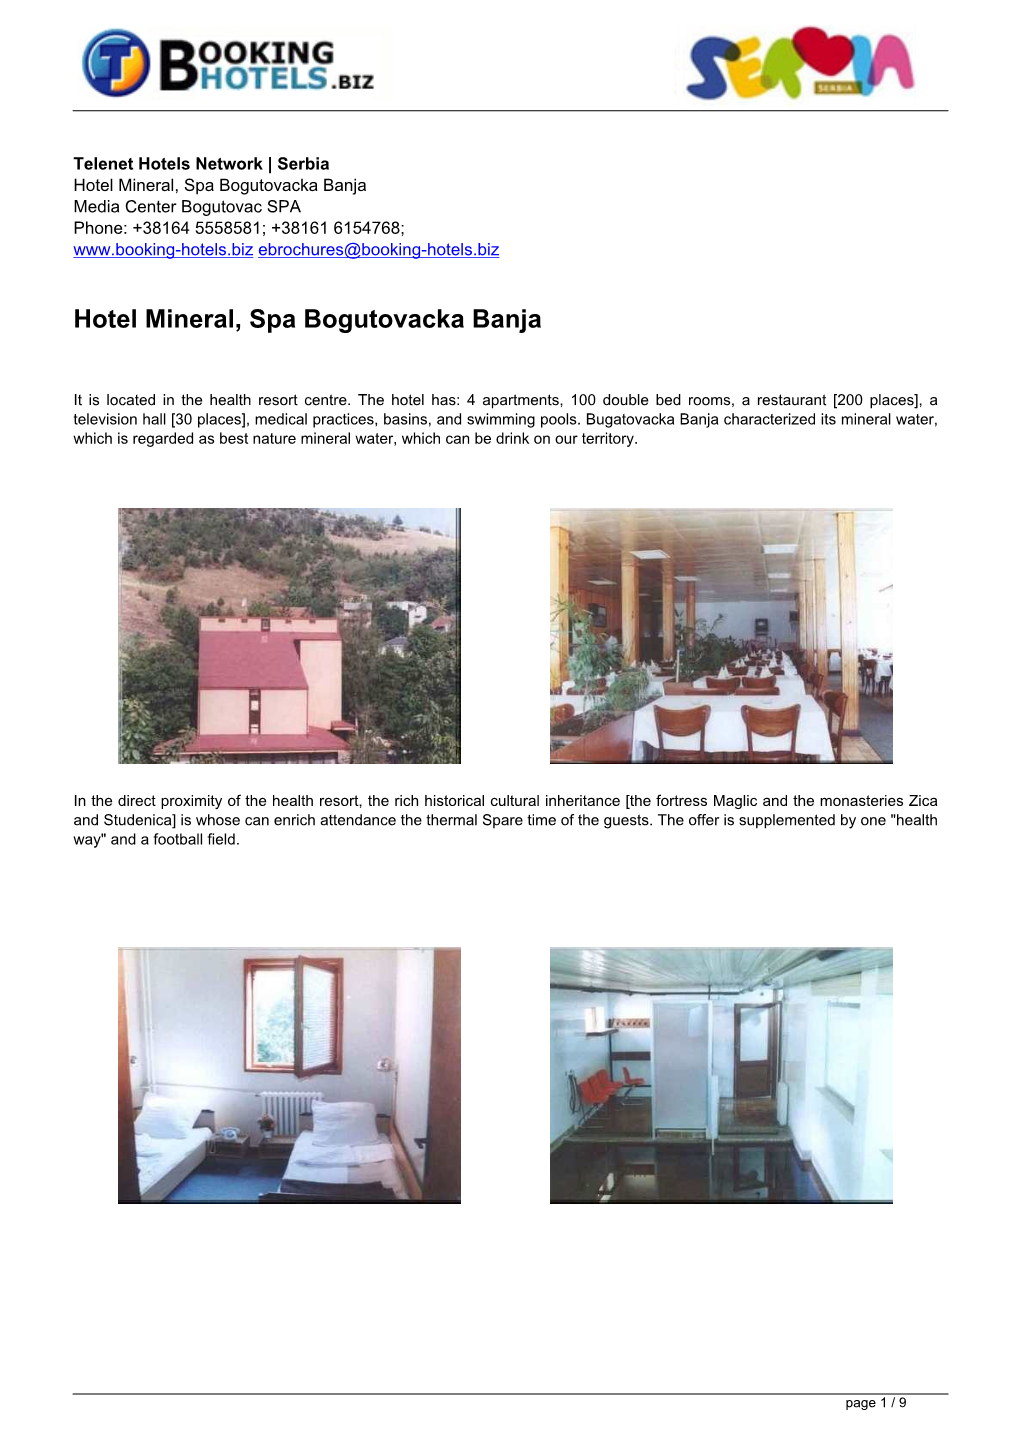 Hotel Mineral, Spa Bogutovacka Banja Media Center Bogutovac SPA Phone: +38164 5558581; +38161 6154768; Ebrochures@Booking-Hotels.Biz